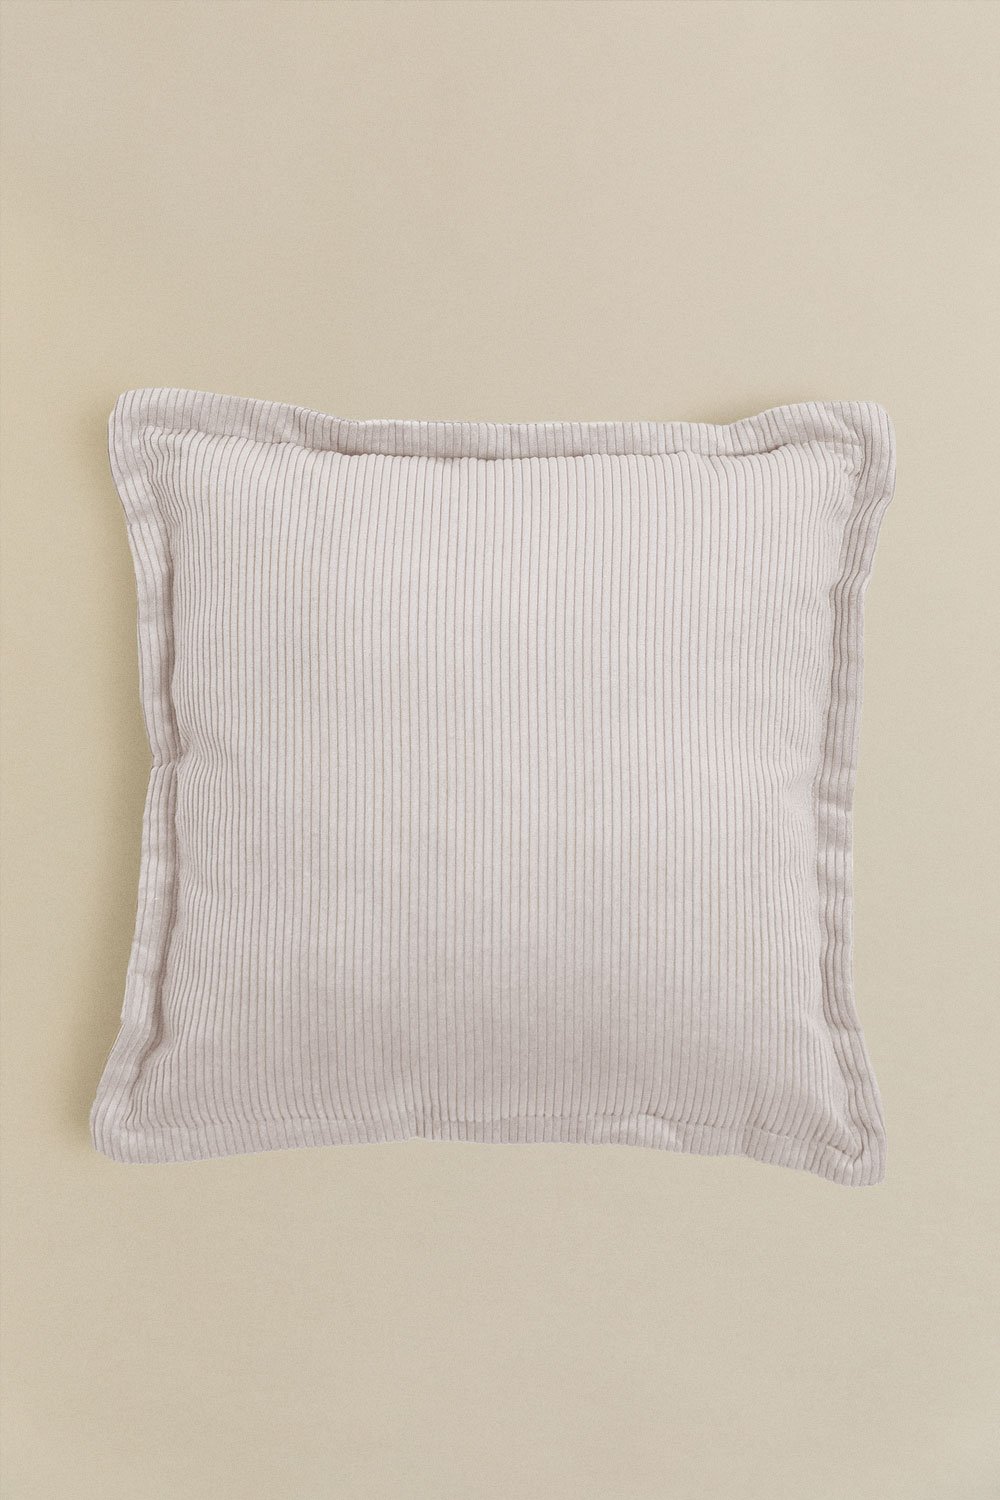 Kata corduroy square cushion (53x53 cm) , gallery image 1